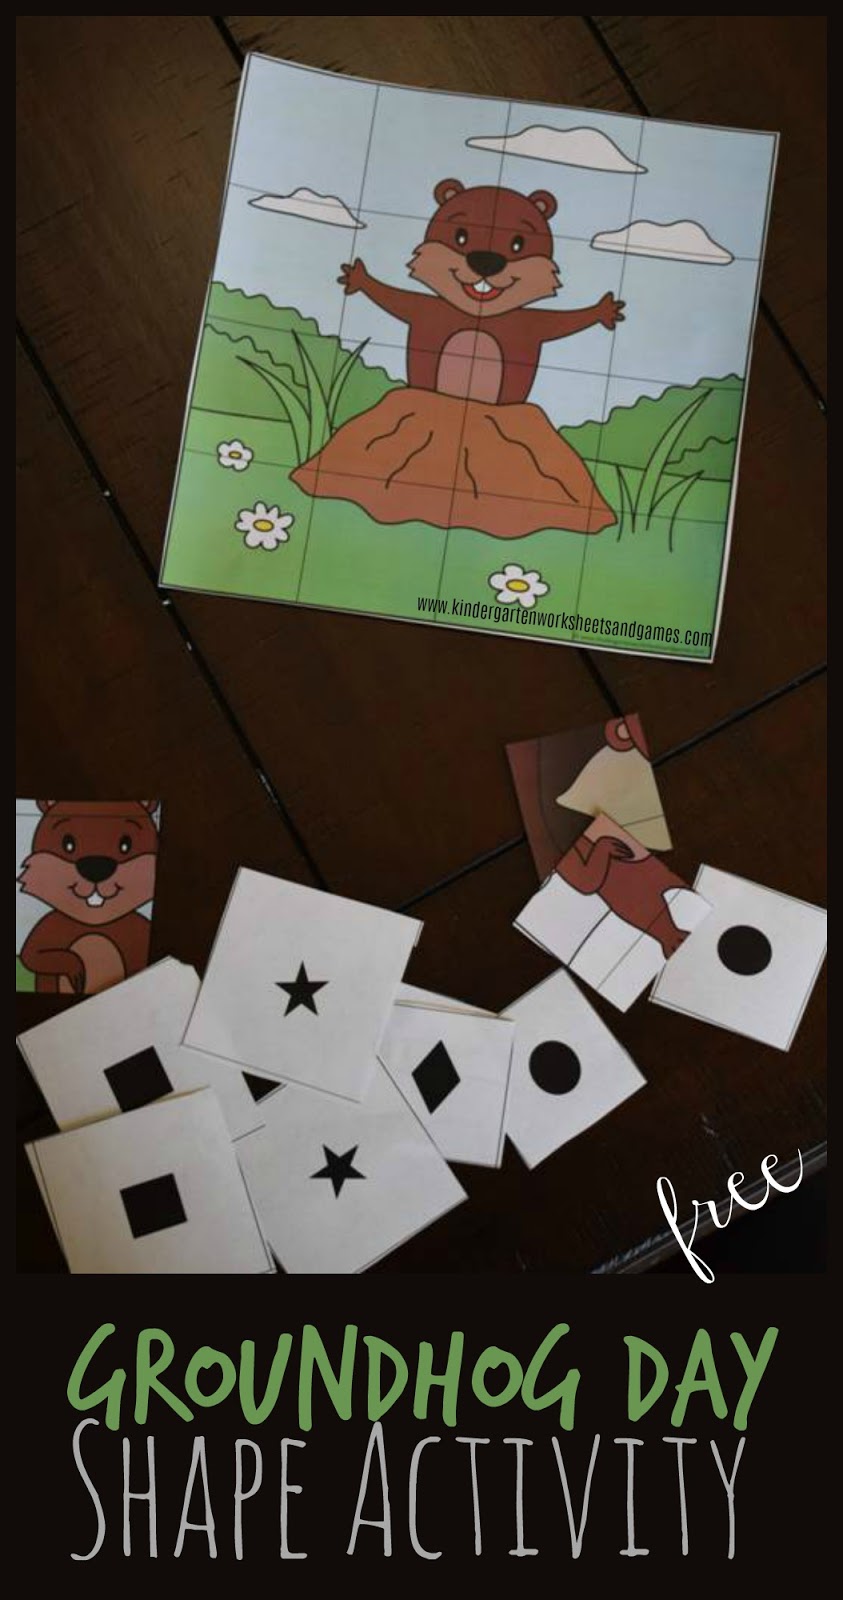 kindergarten-worksheets-and-games-free-groundhog-day-shape-activity